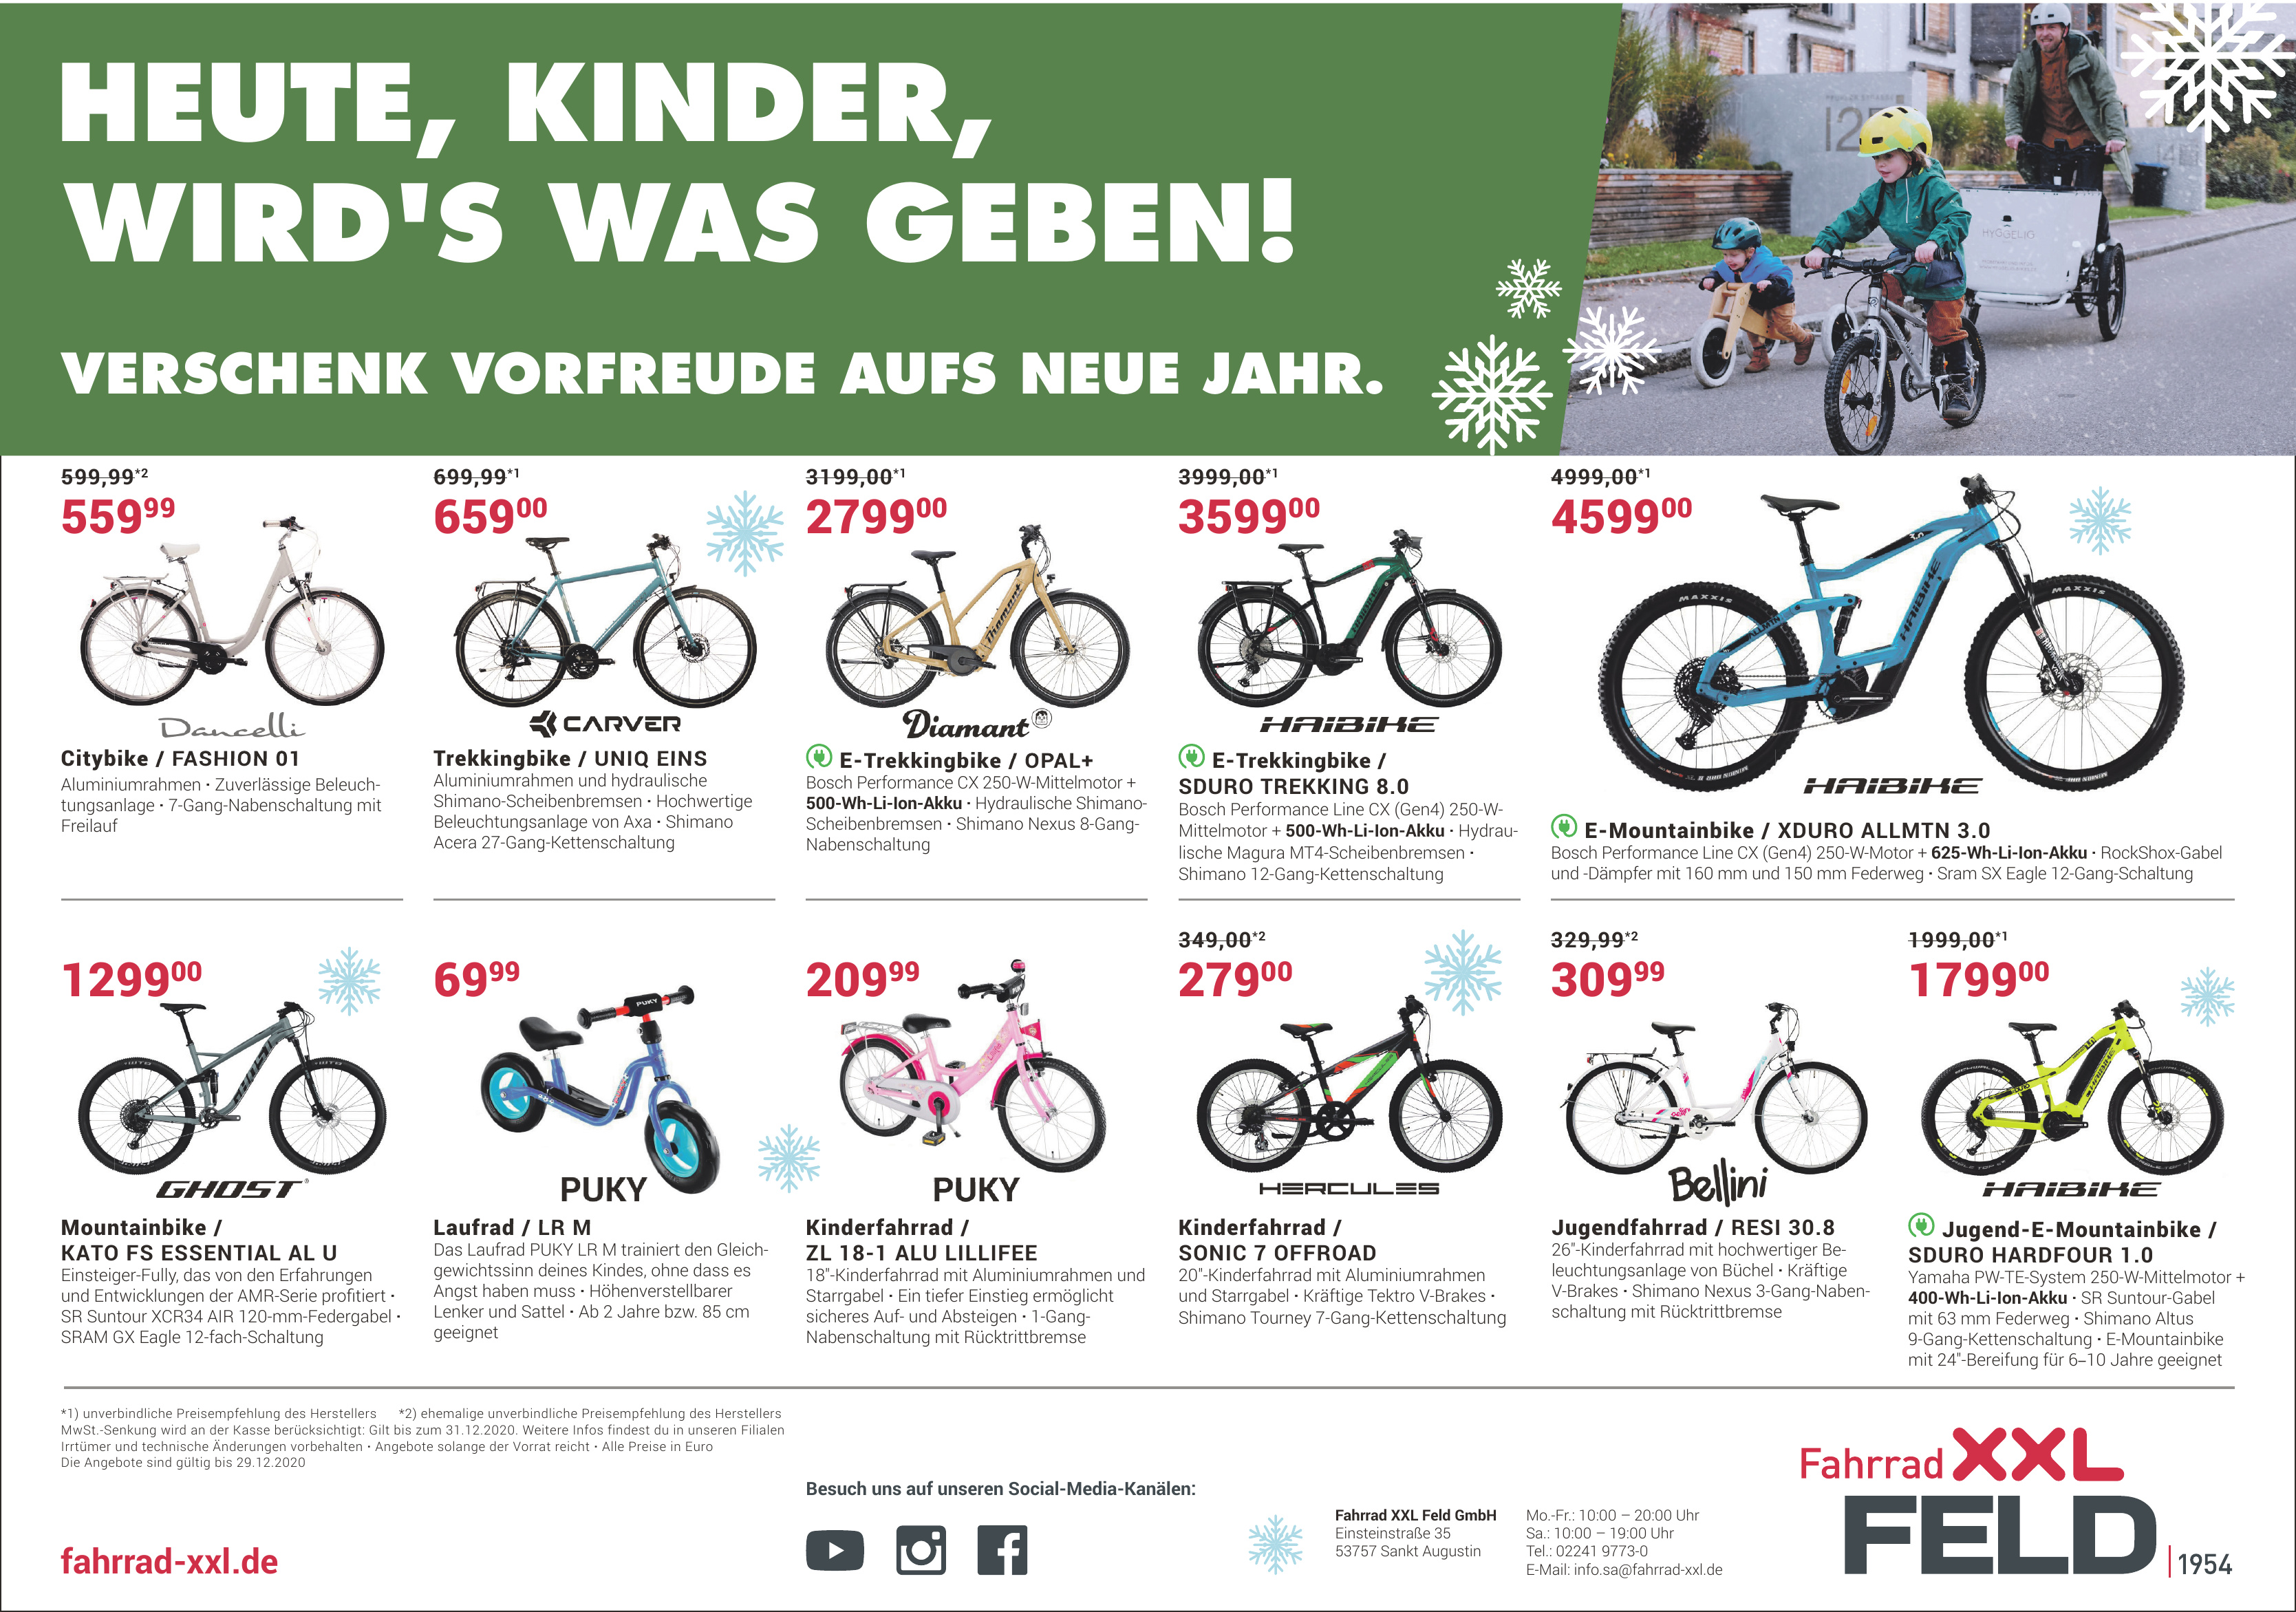 Fahrrad XXL Feld GmbH